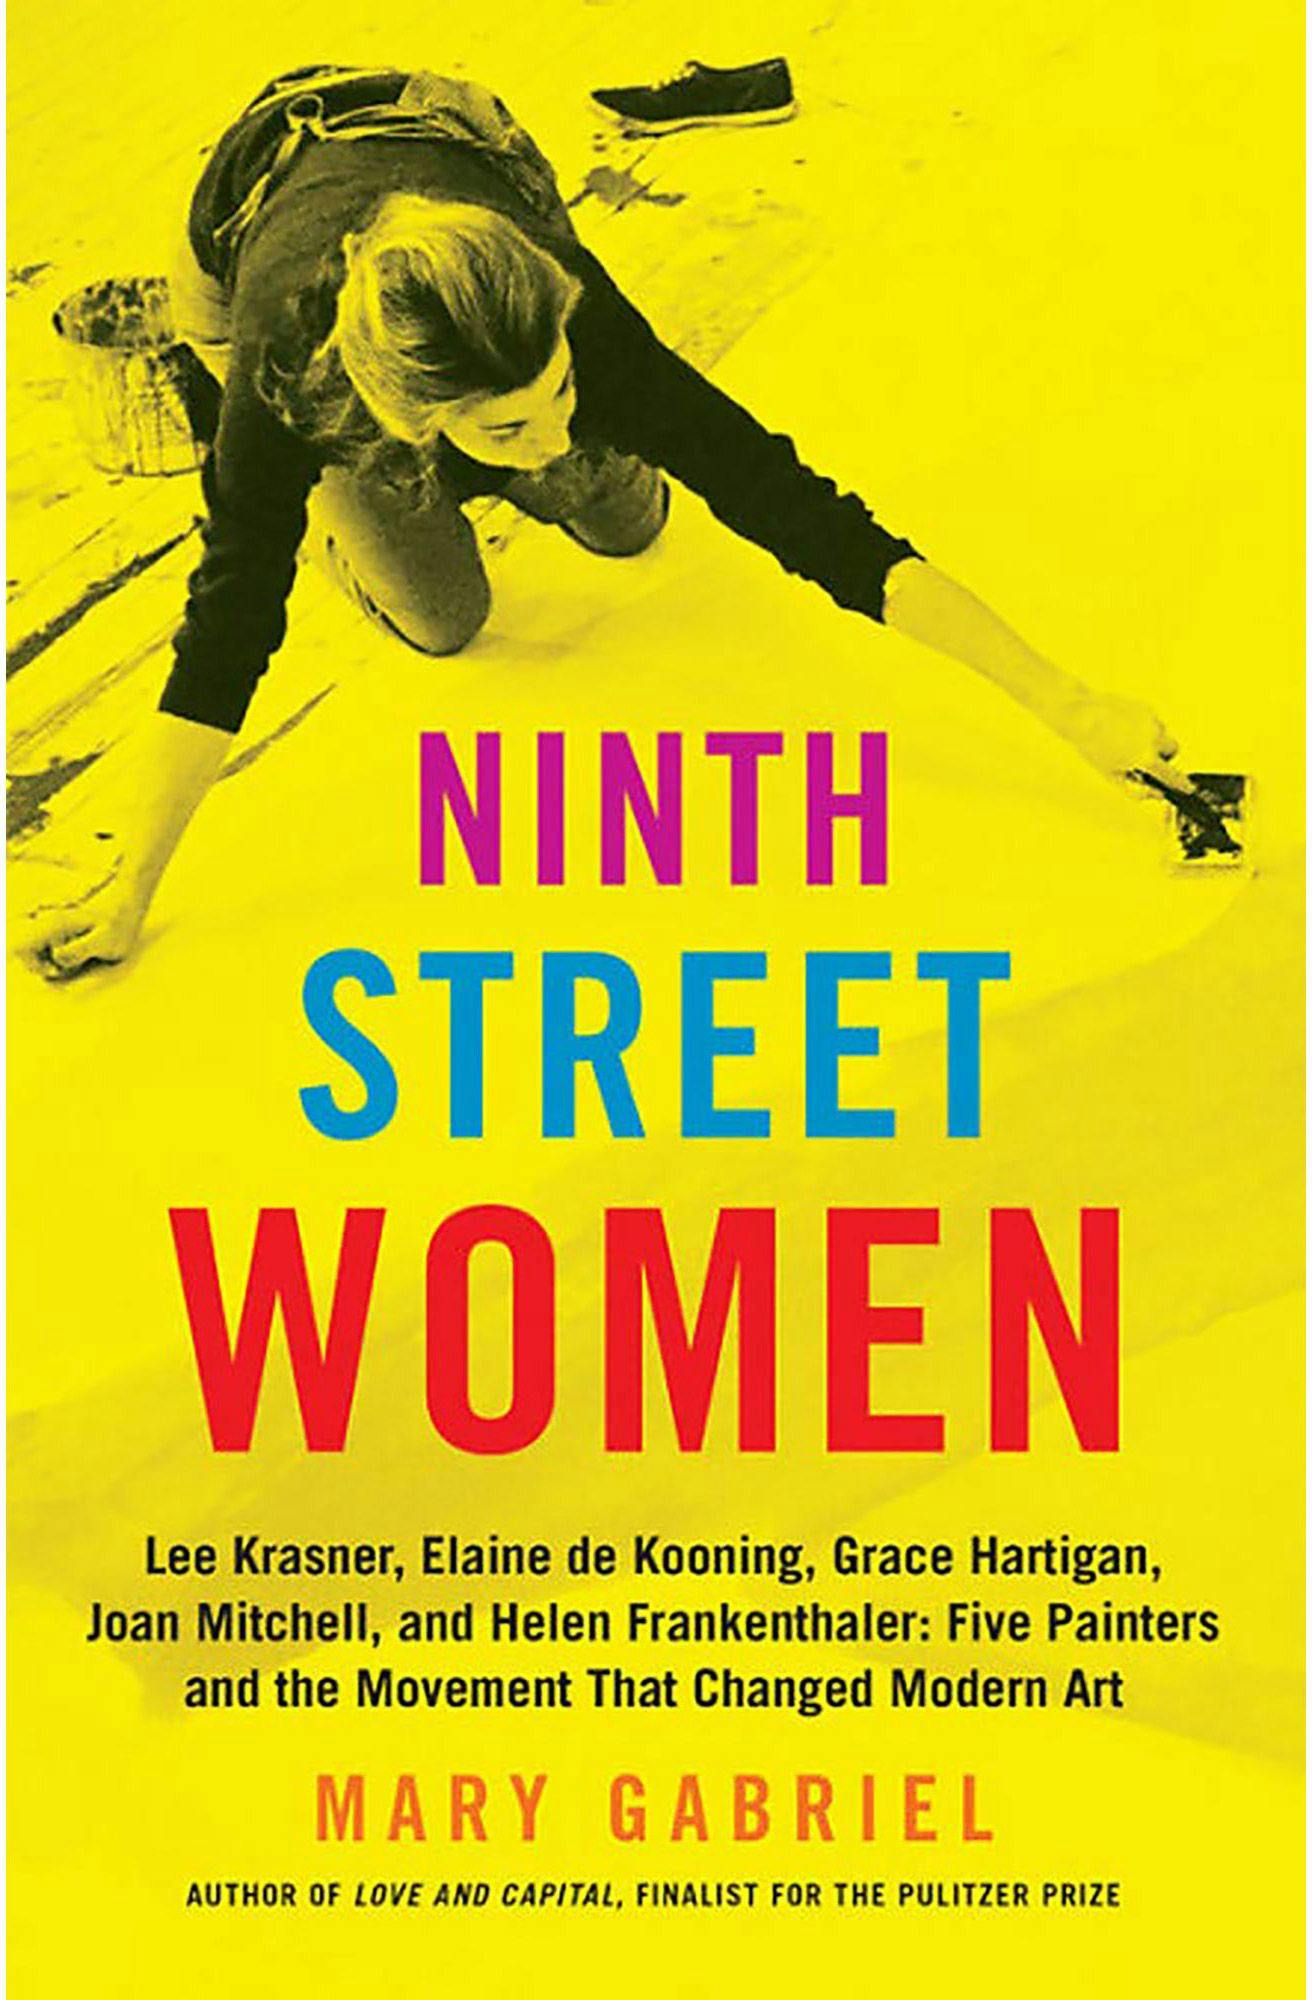 The cover of a book, titled Ninth Street Women Lee Krasner, Elaine De Kooning, Grace Hartigan, Joan Mitchell, And Helen Frankenthaler: Five Painters And The Movement That Changed Modern Art.